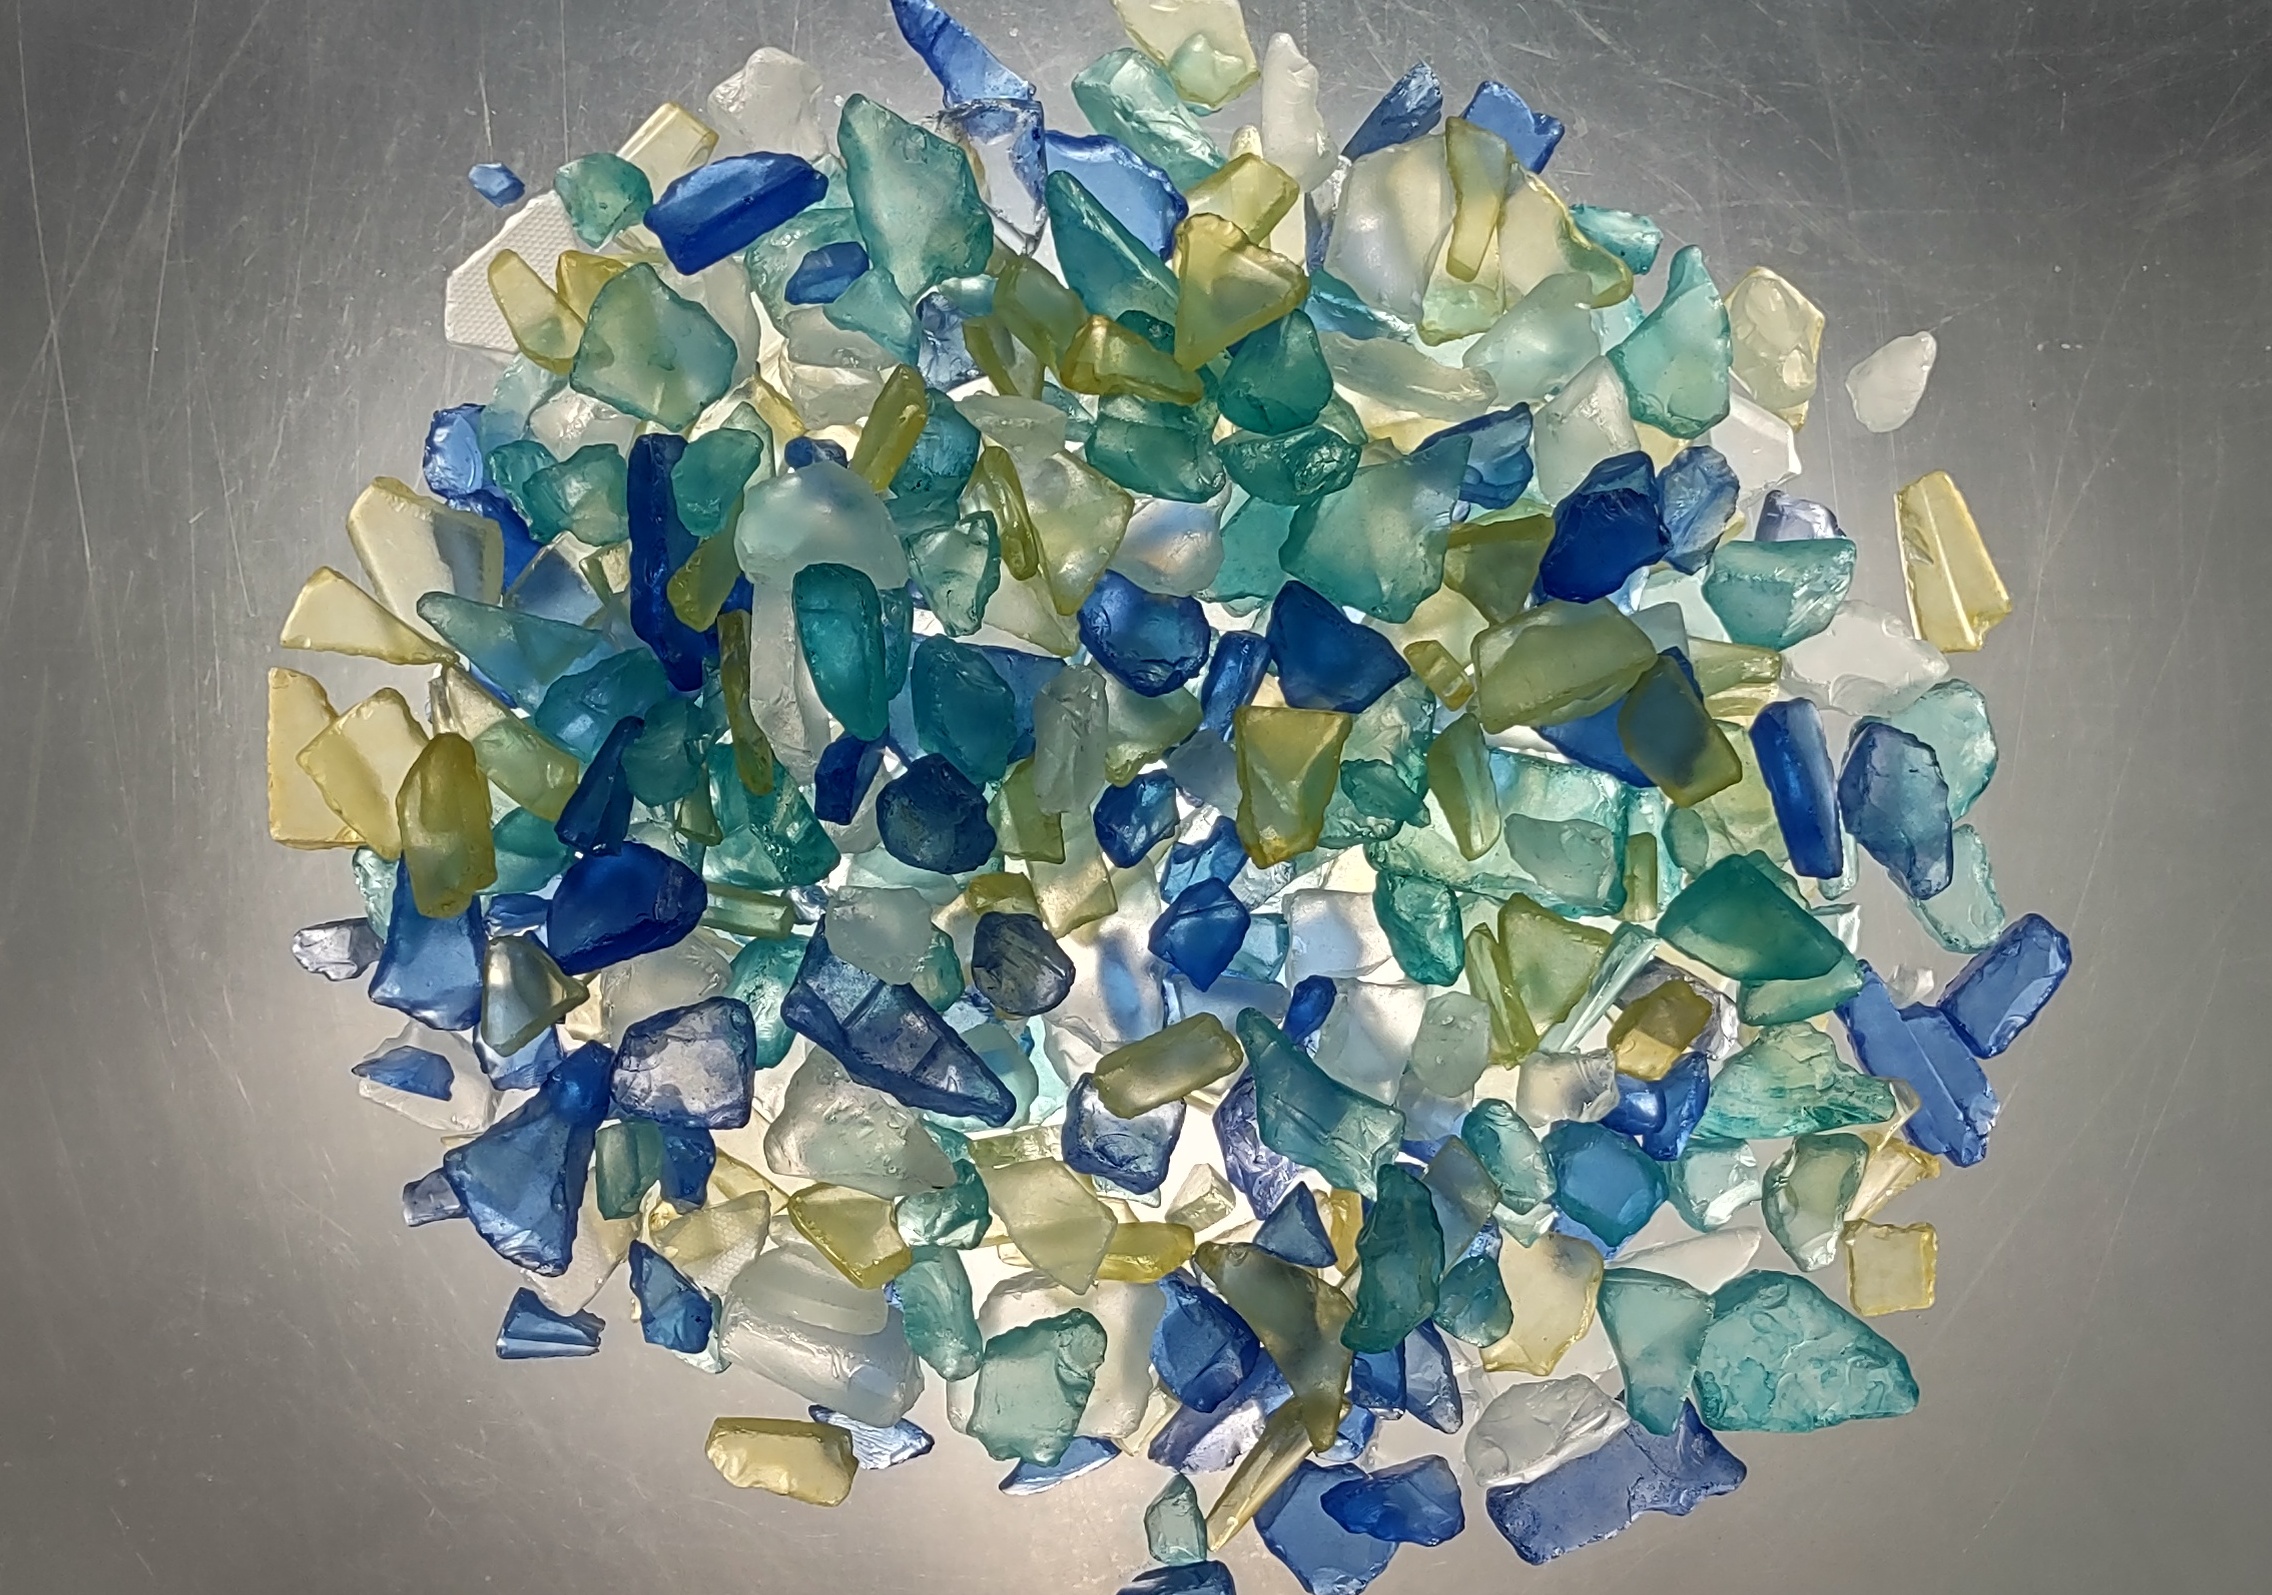 Medium Sea Glass Beach Glass Frosty Tumbled Beach Glass Great for